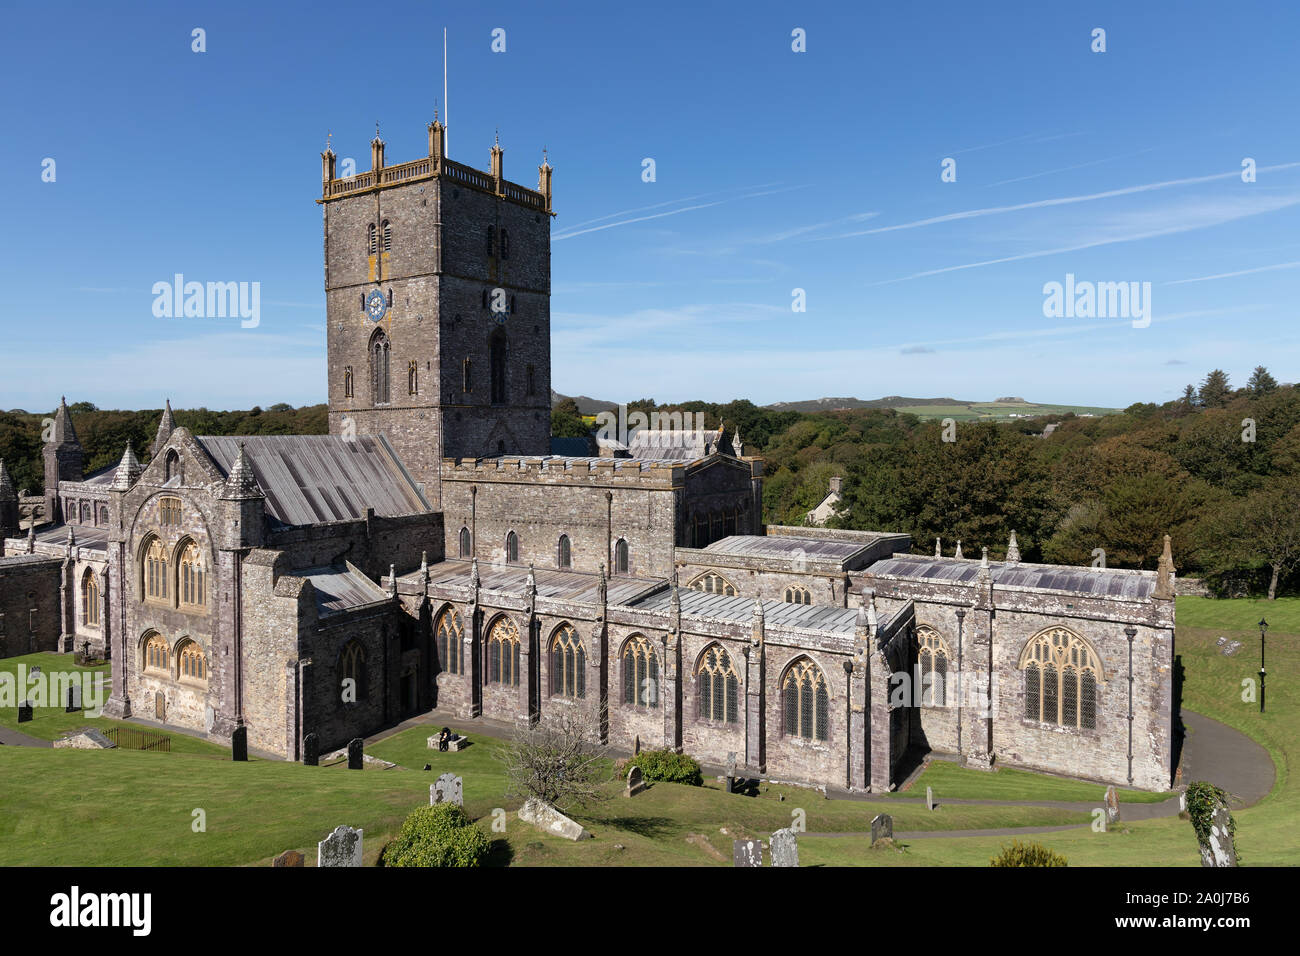 ST DAVID'S, PEMBROKESHIRE/UK - 13. SEPTEMBER: Blick auf die Kathedrale von St. David's in Pembrokeshire am 13. September 2019. Zwei unidentied Menschen Stockfoto